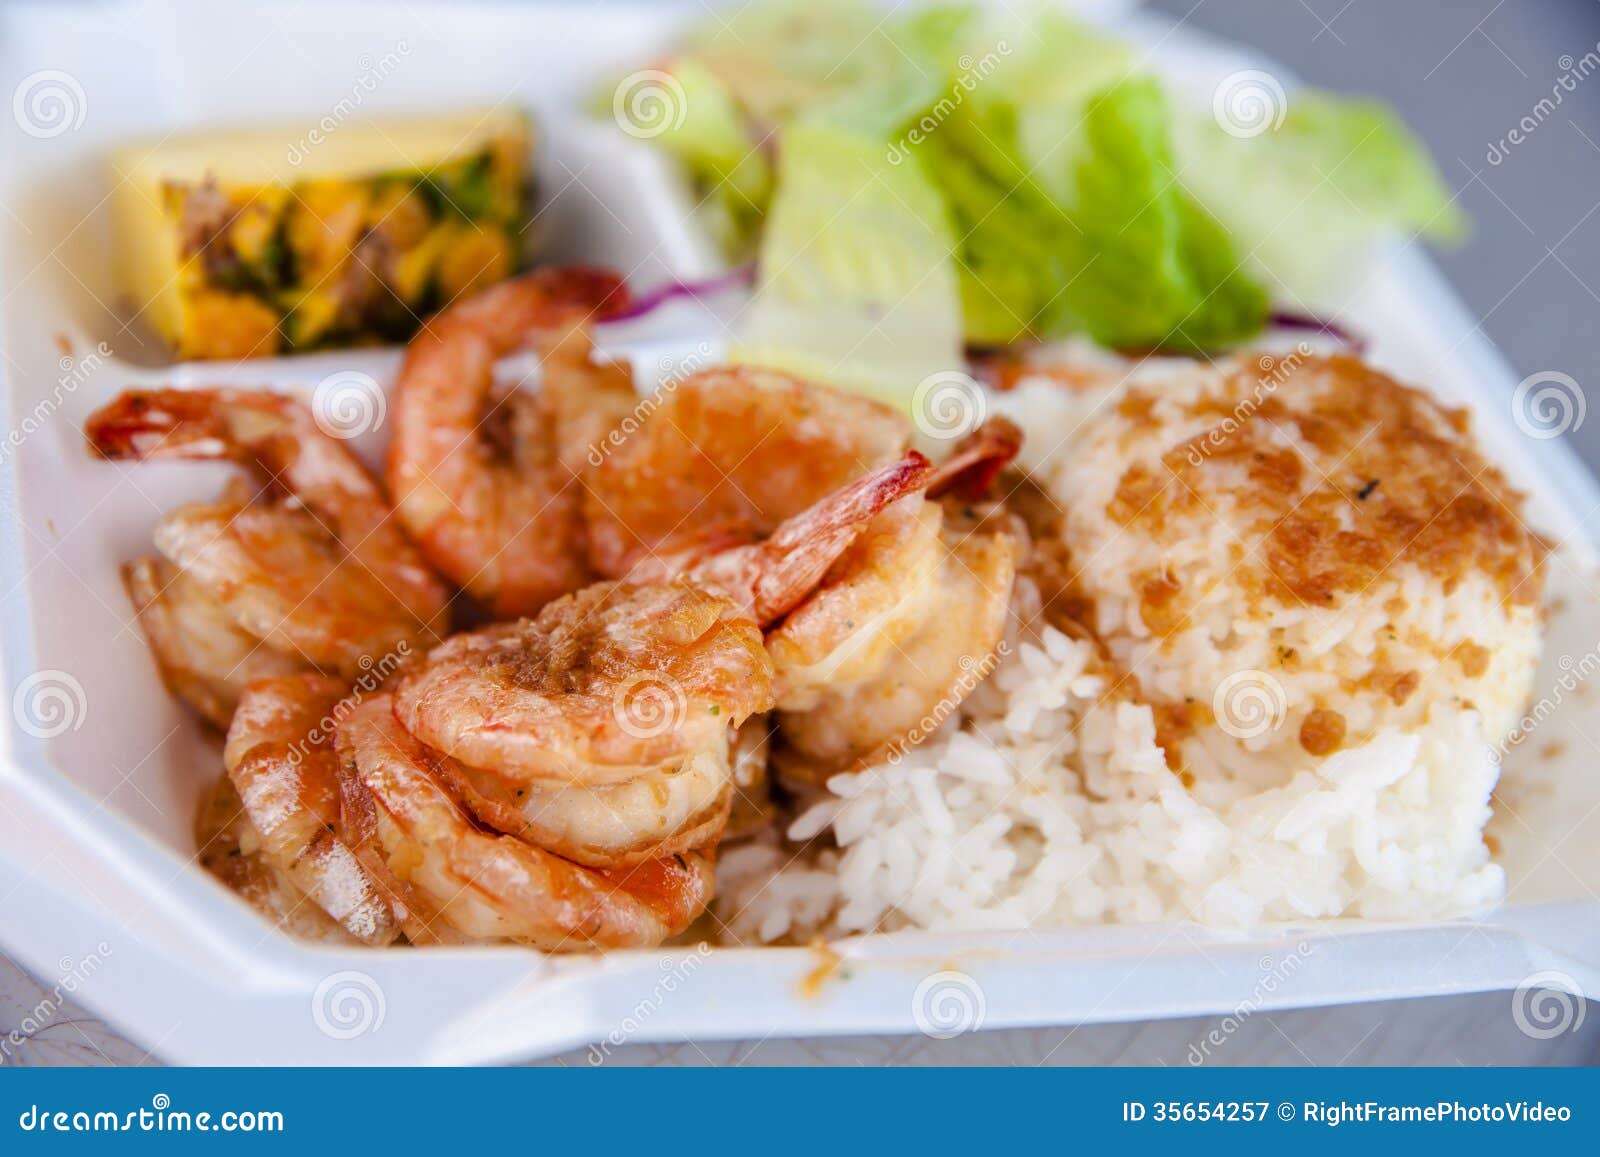 hawaii shrimp scampi and rice